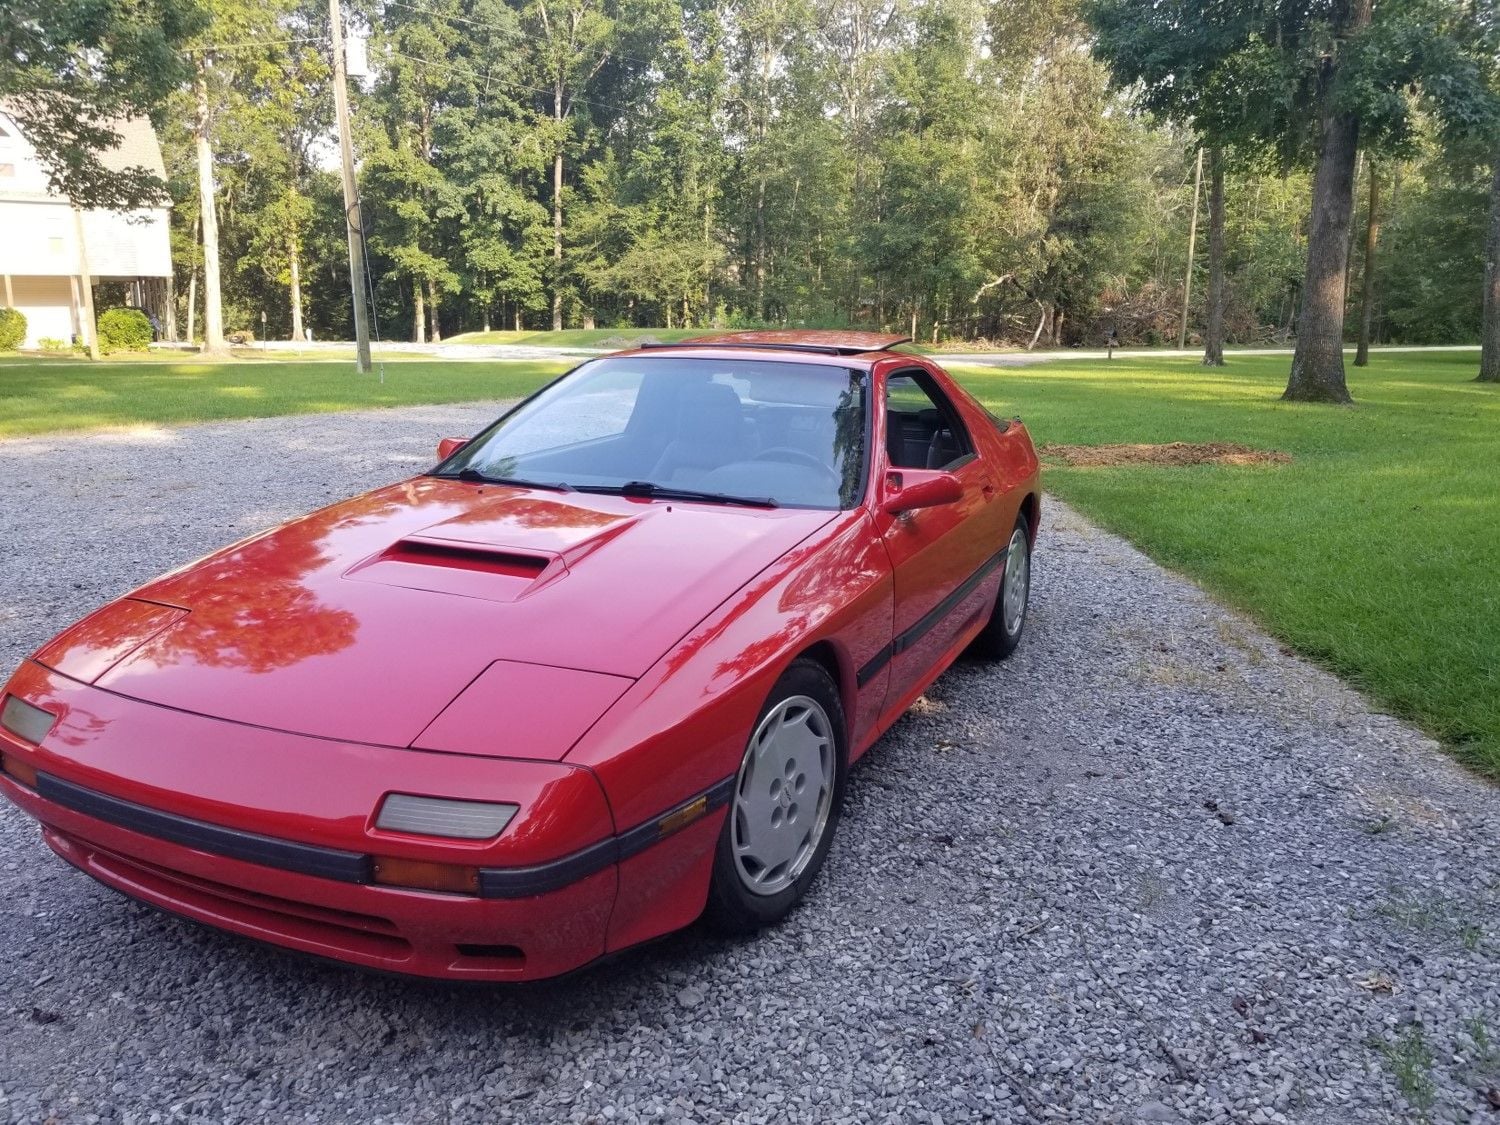 1987 Mazda RX-7 - For Sale 1987 RX 7 TII (Montgomery Alabama) - Used - VIN jmlfc3322h0544804 - 157,649 Miles - 2WD - Manual - Coupe - Red - Lowndesboro, AL 36752, United States